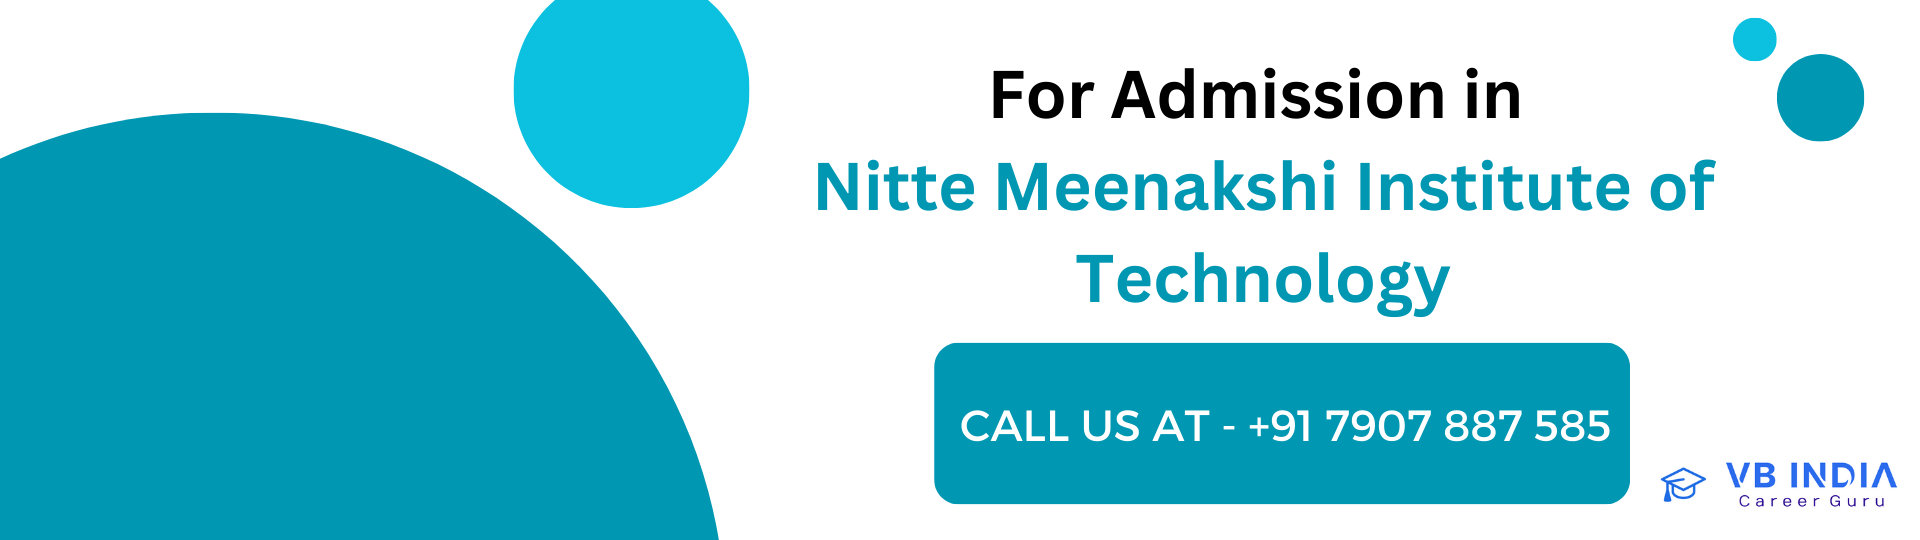 Nitte-Meenakshi-Institute-of-Technology